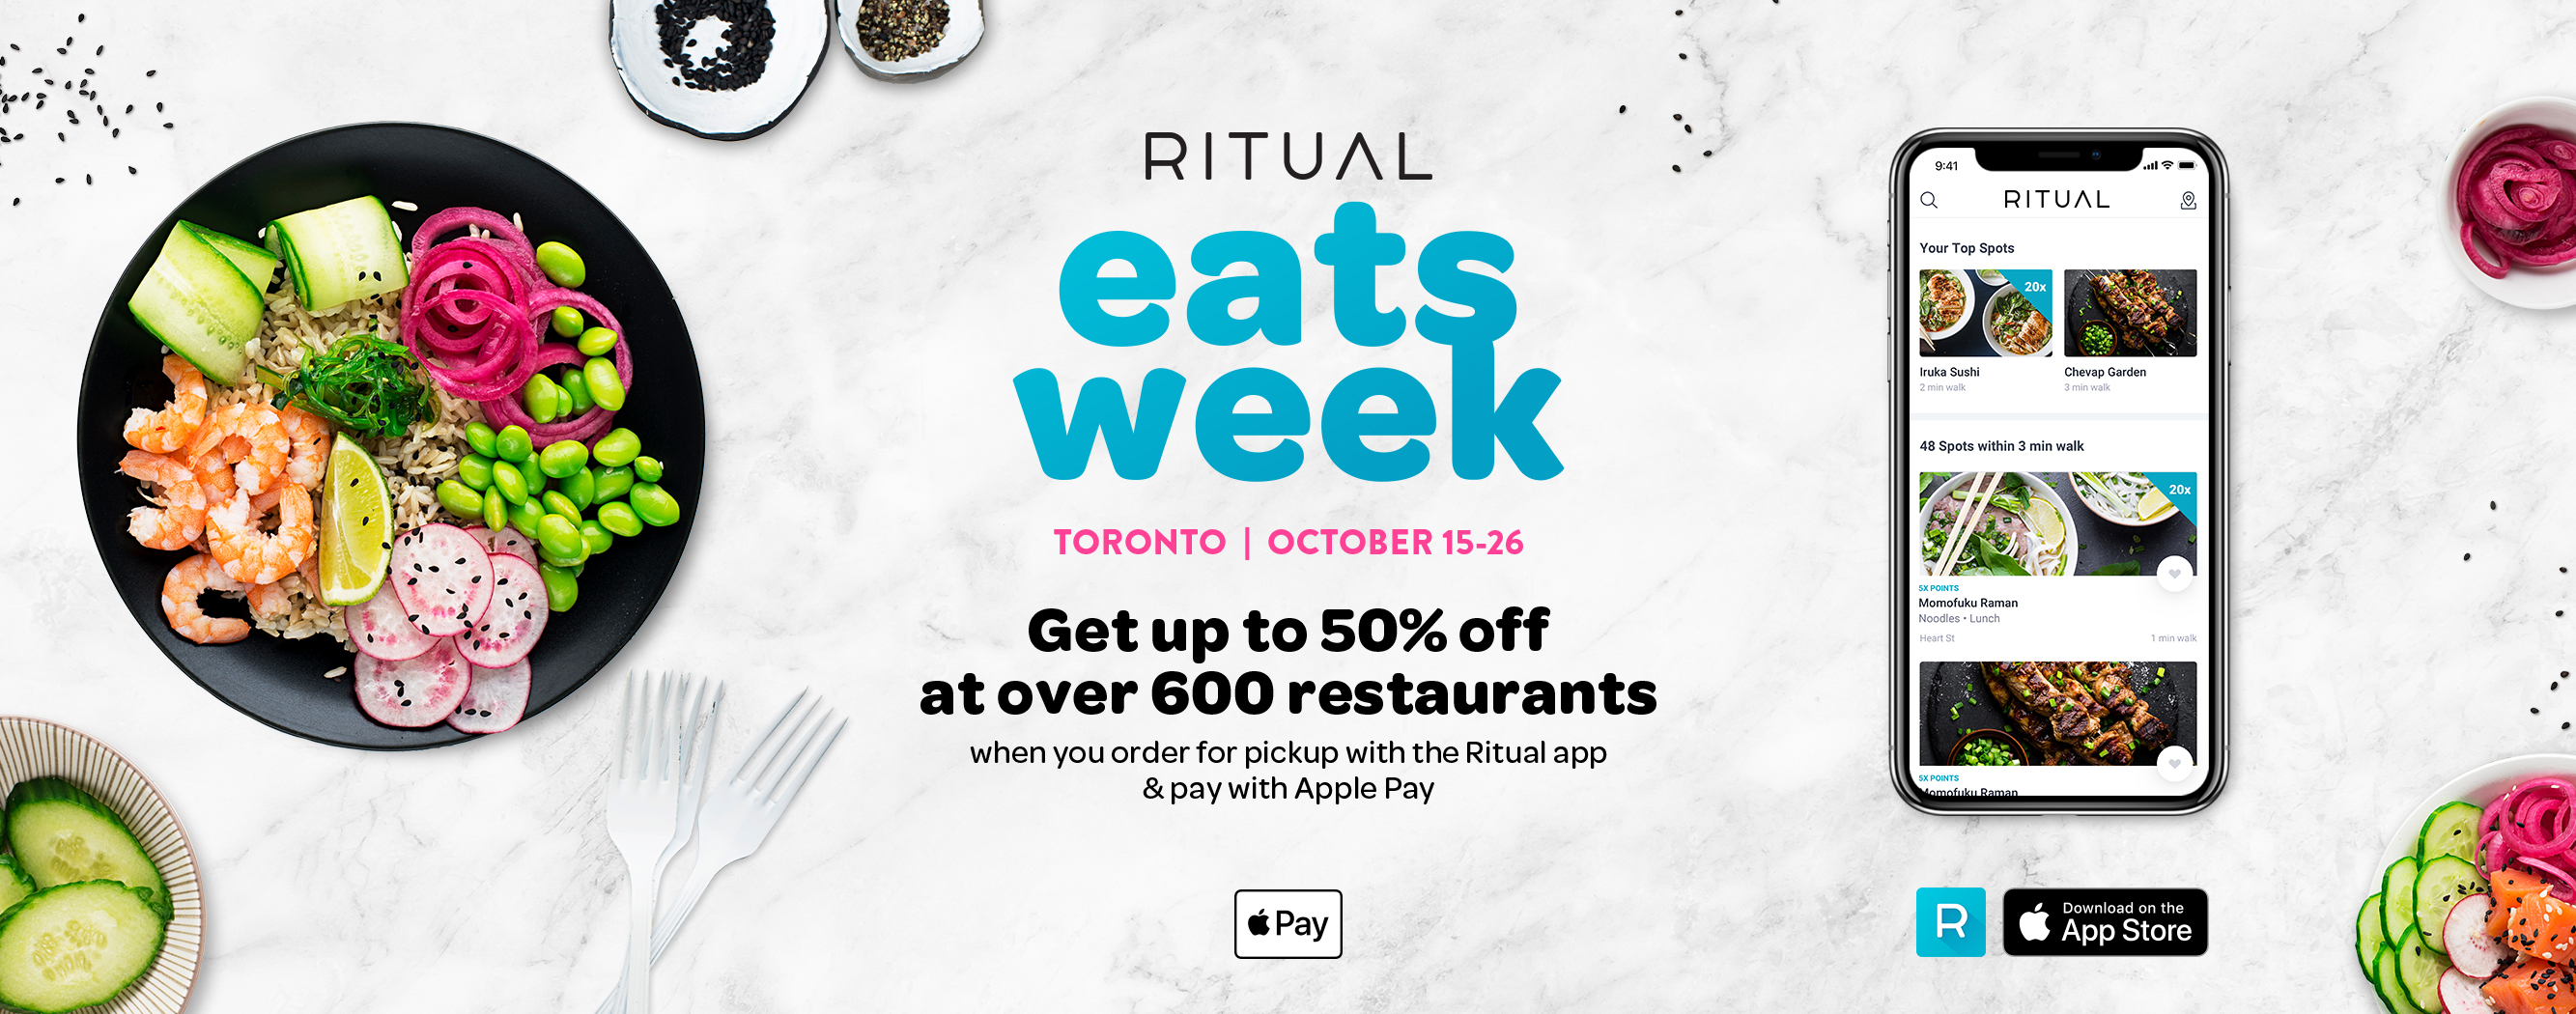 Ritual Eats Week Toronto